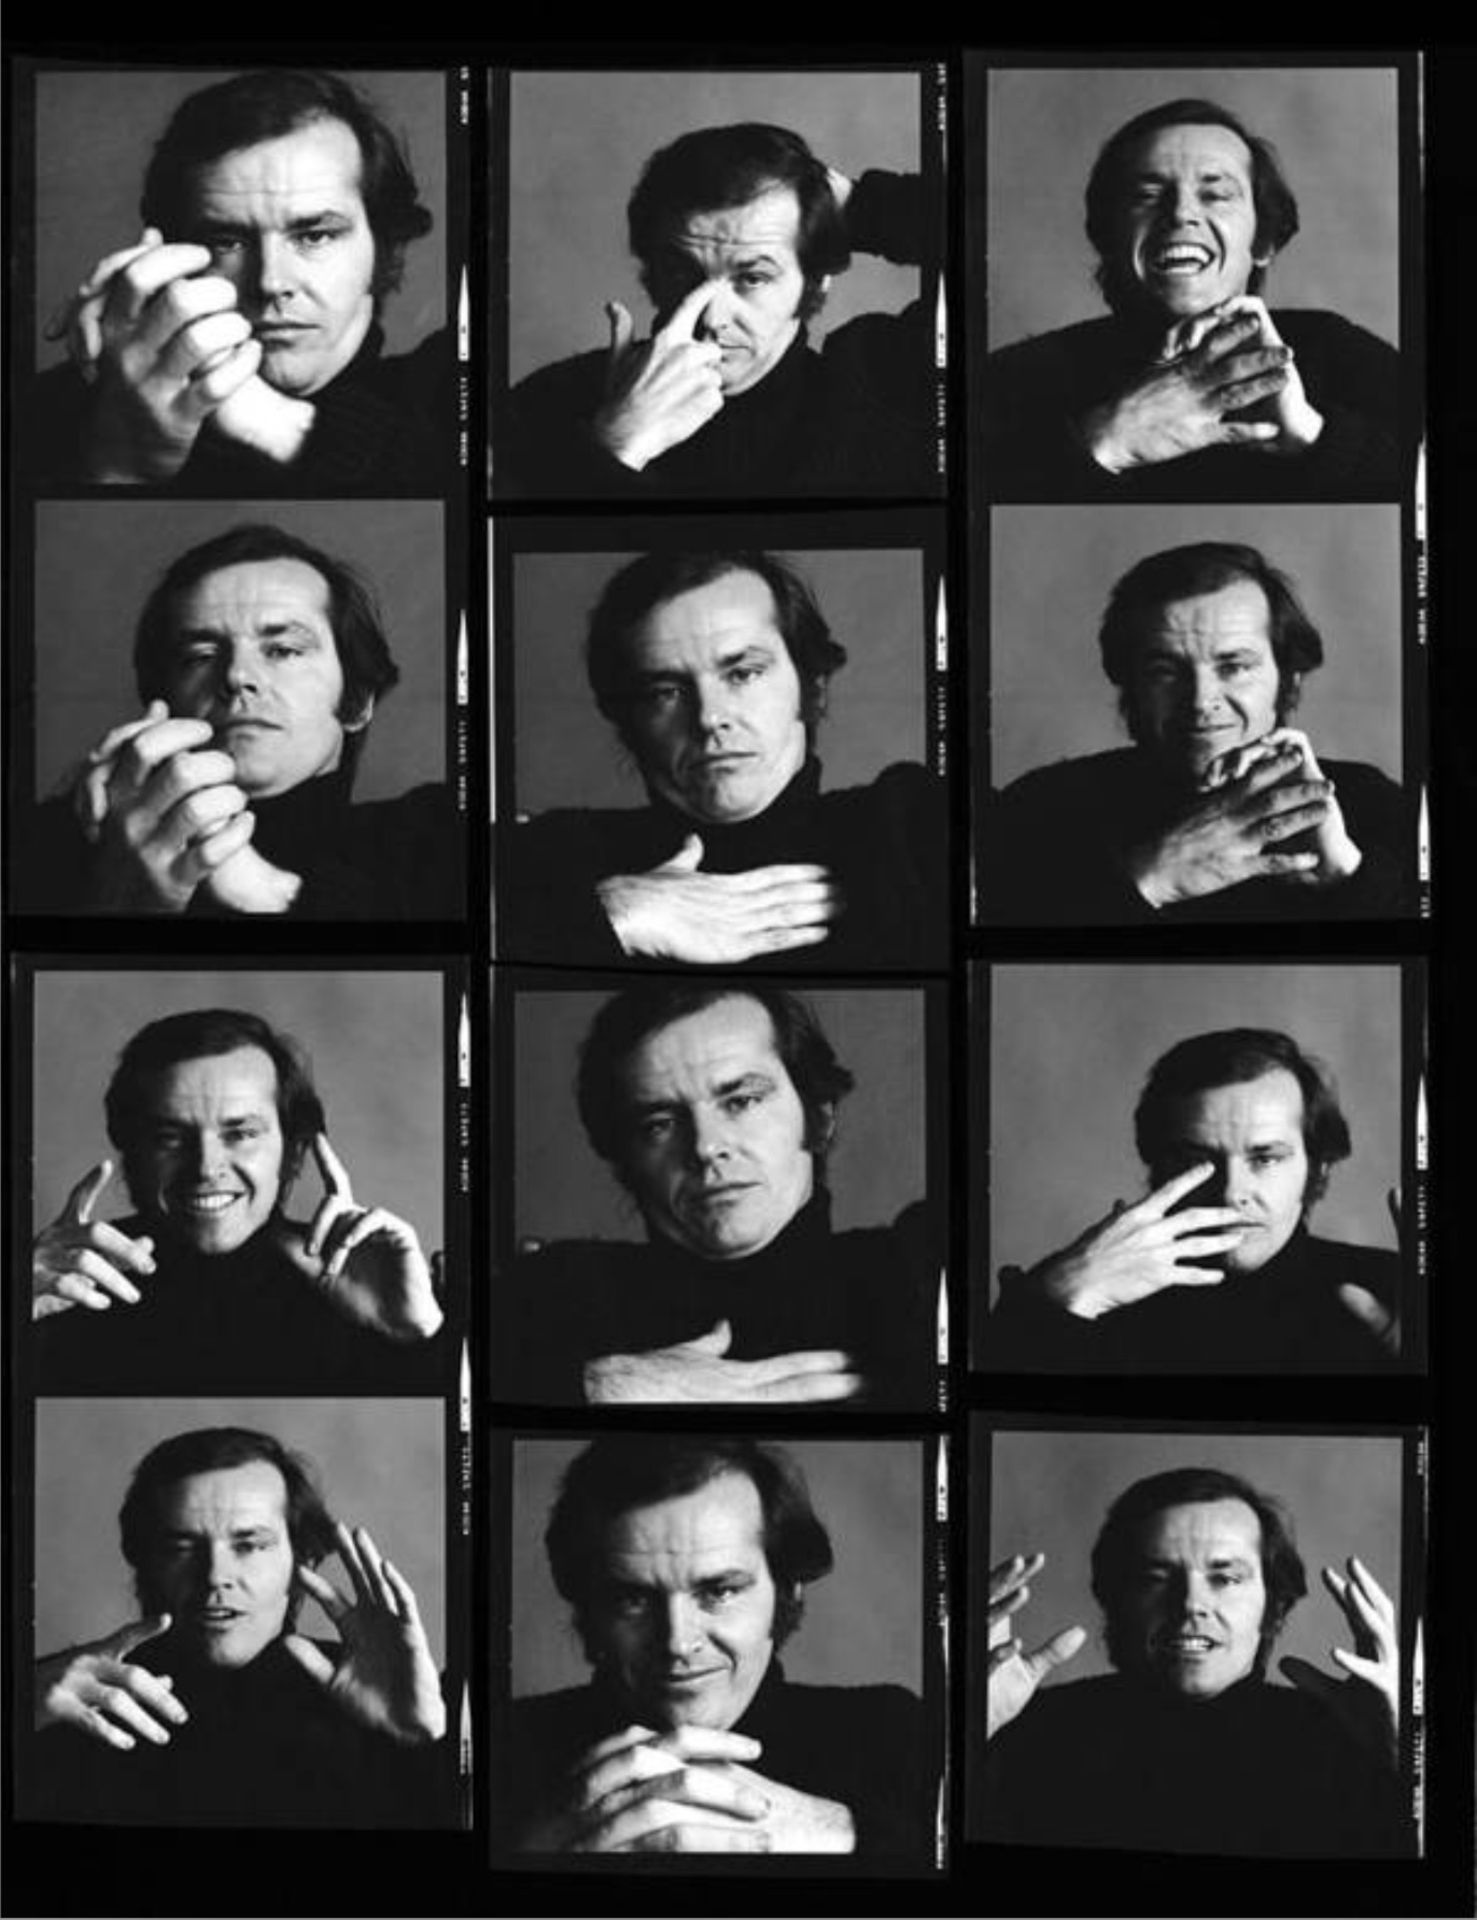 Jack Robinson "Jack Nicholson, New York, 1970" Contact Sheet